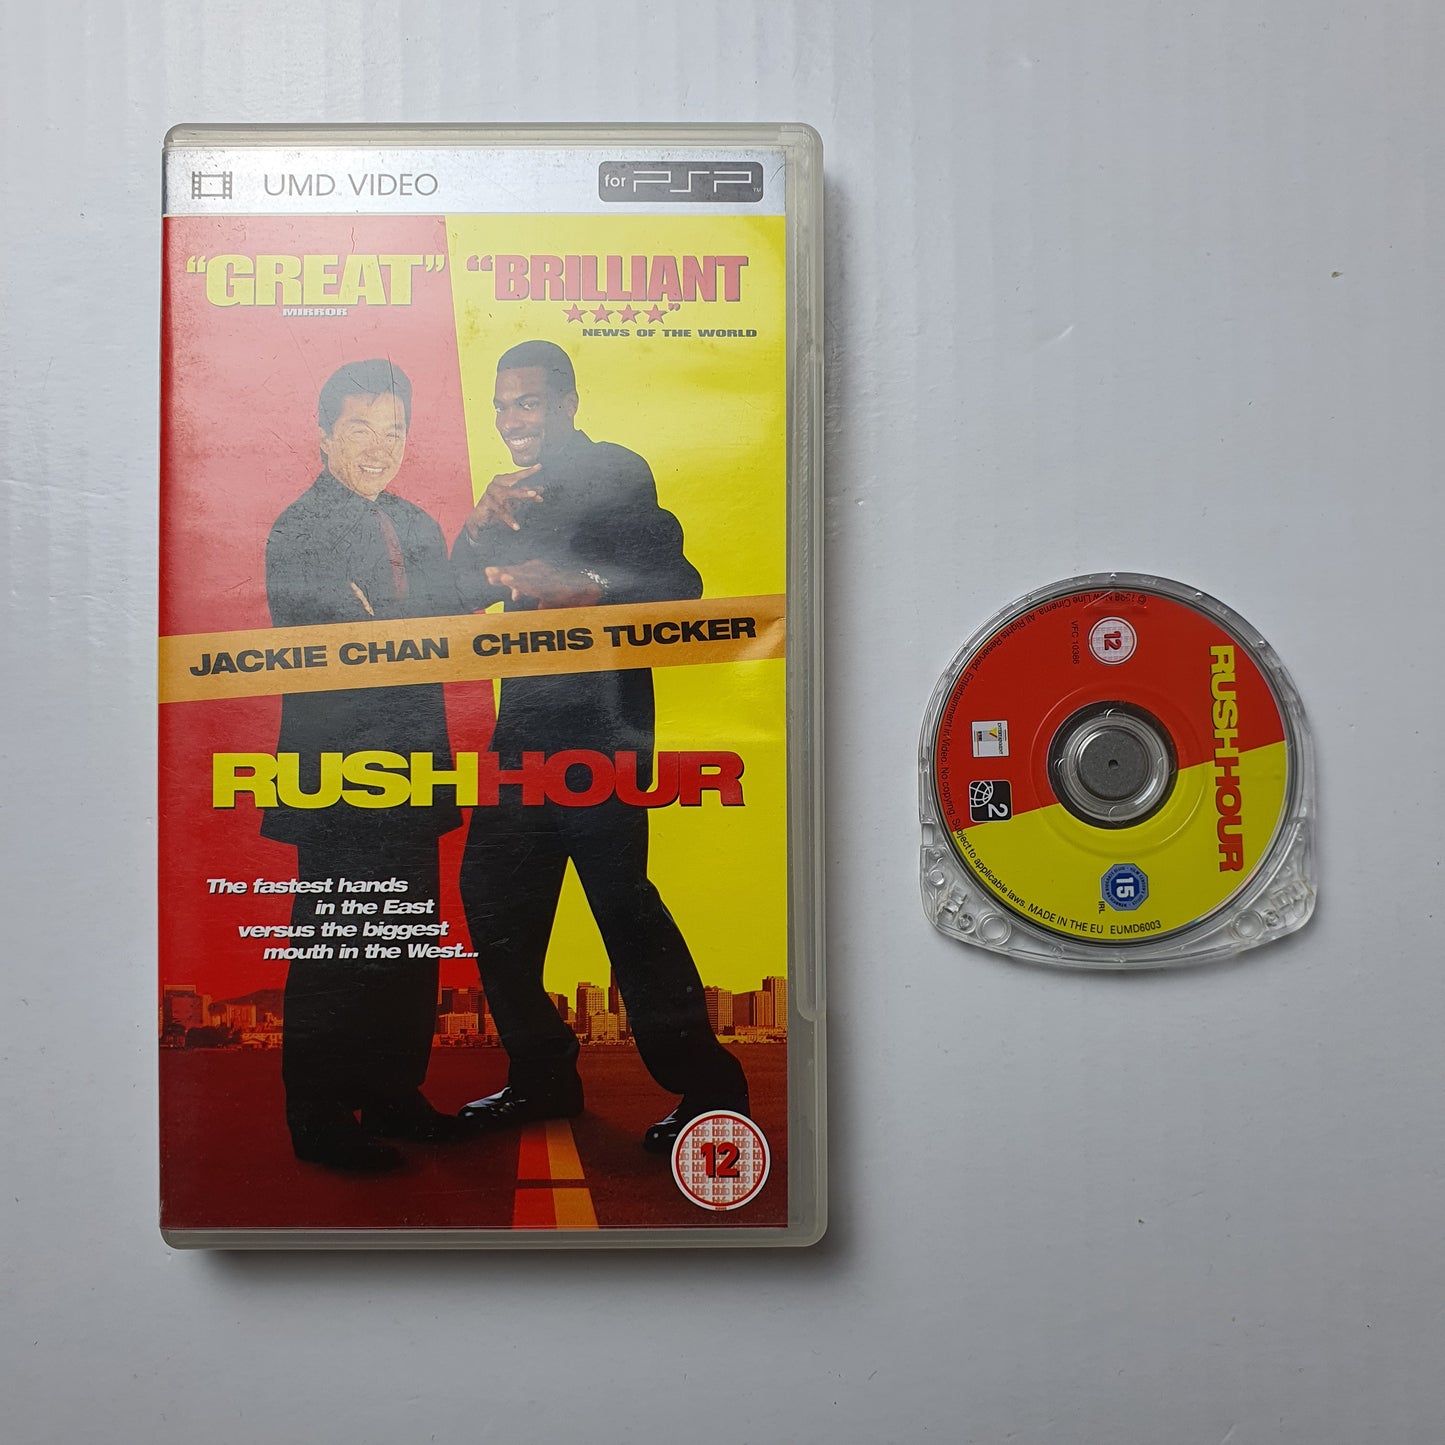 Rush Hour | Sony PlayStation Portable PSP (UMD Video)